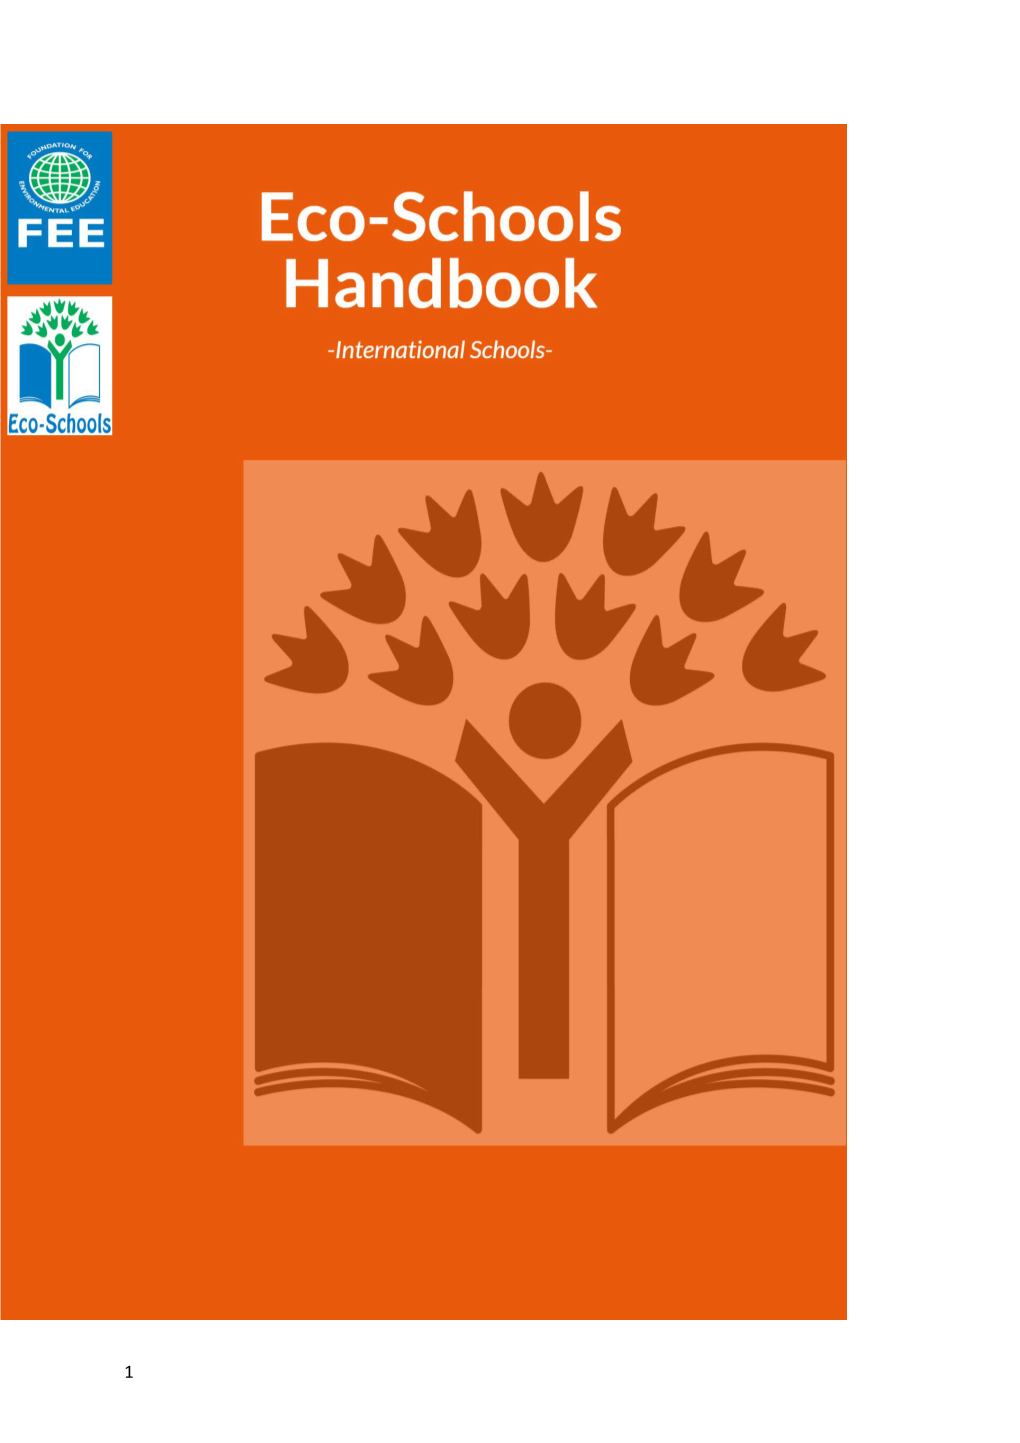 Eco-Schools International Handbook for International Schools